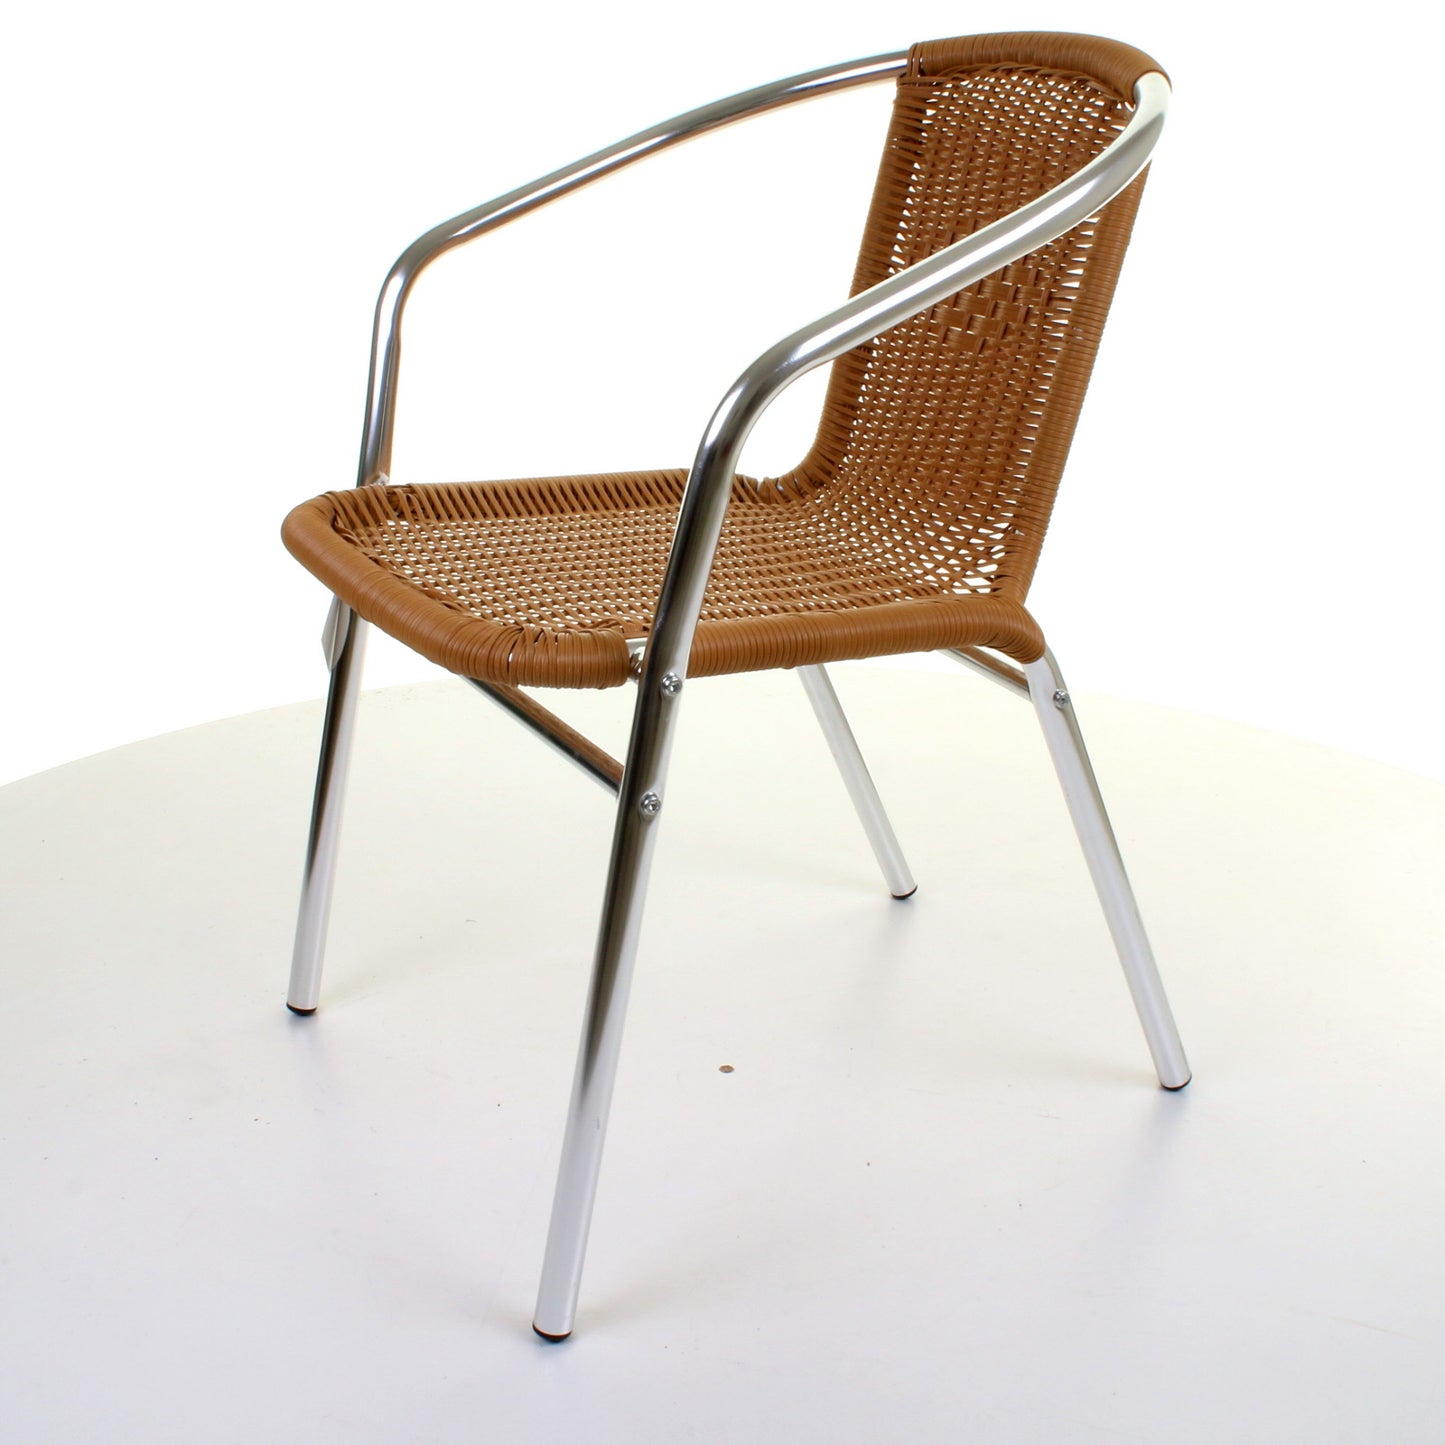 Tan Wicker Chrome Bistro Chair